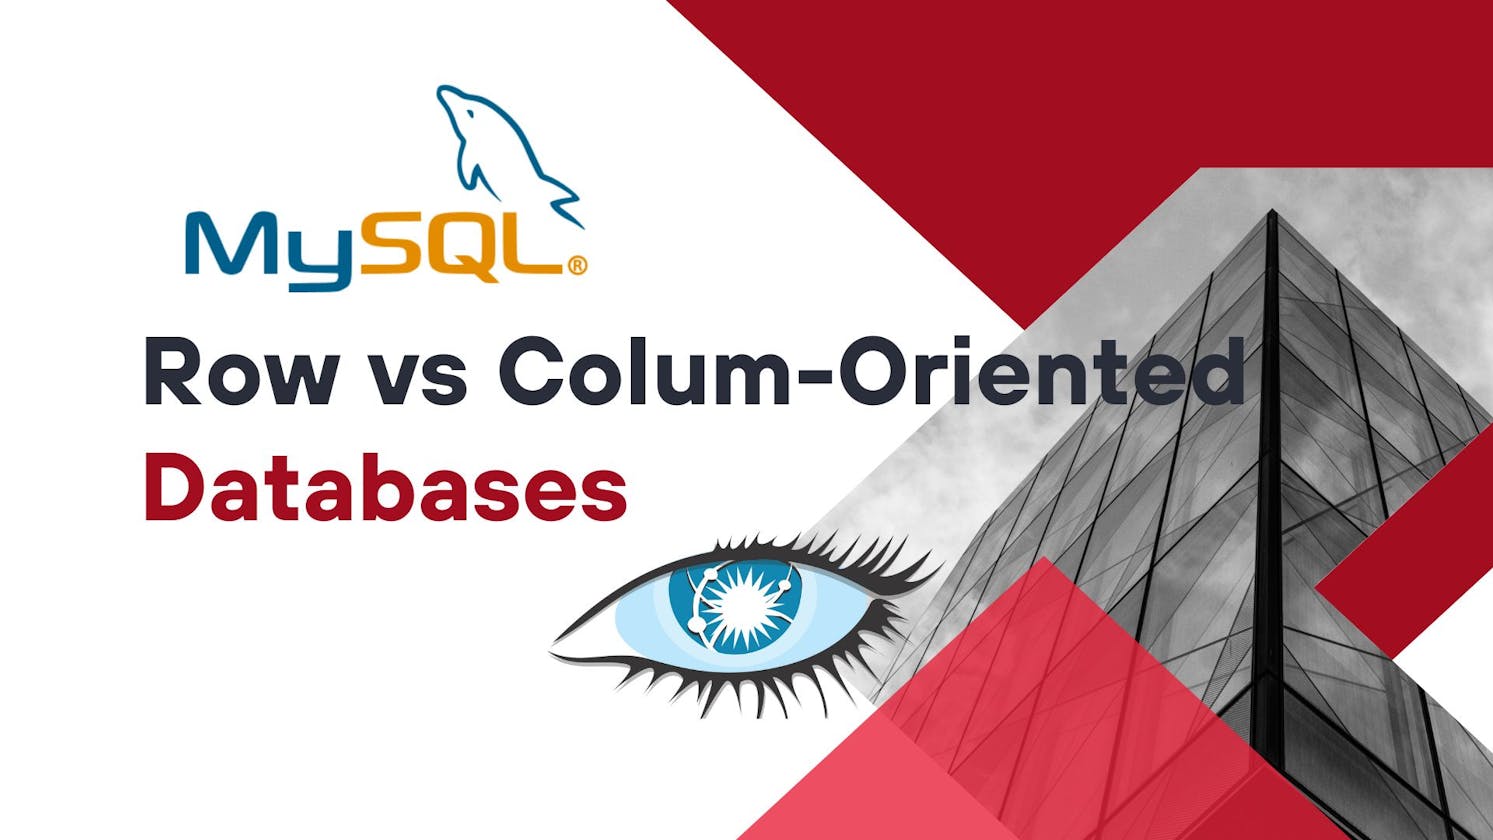 Row vs Column-Oriented (Columnar) Databases